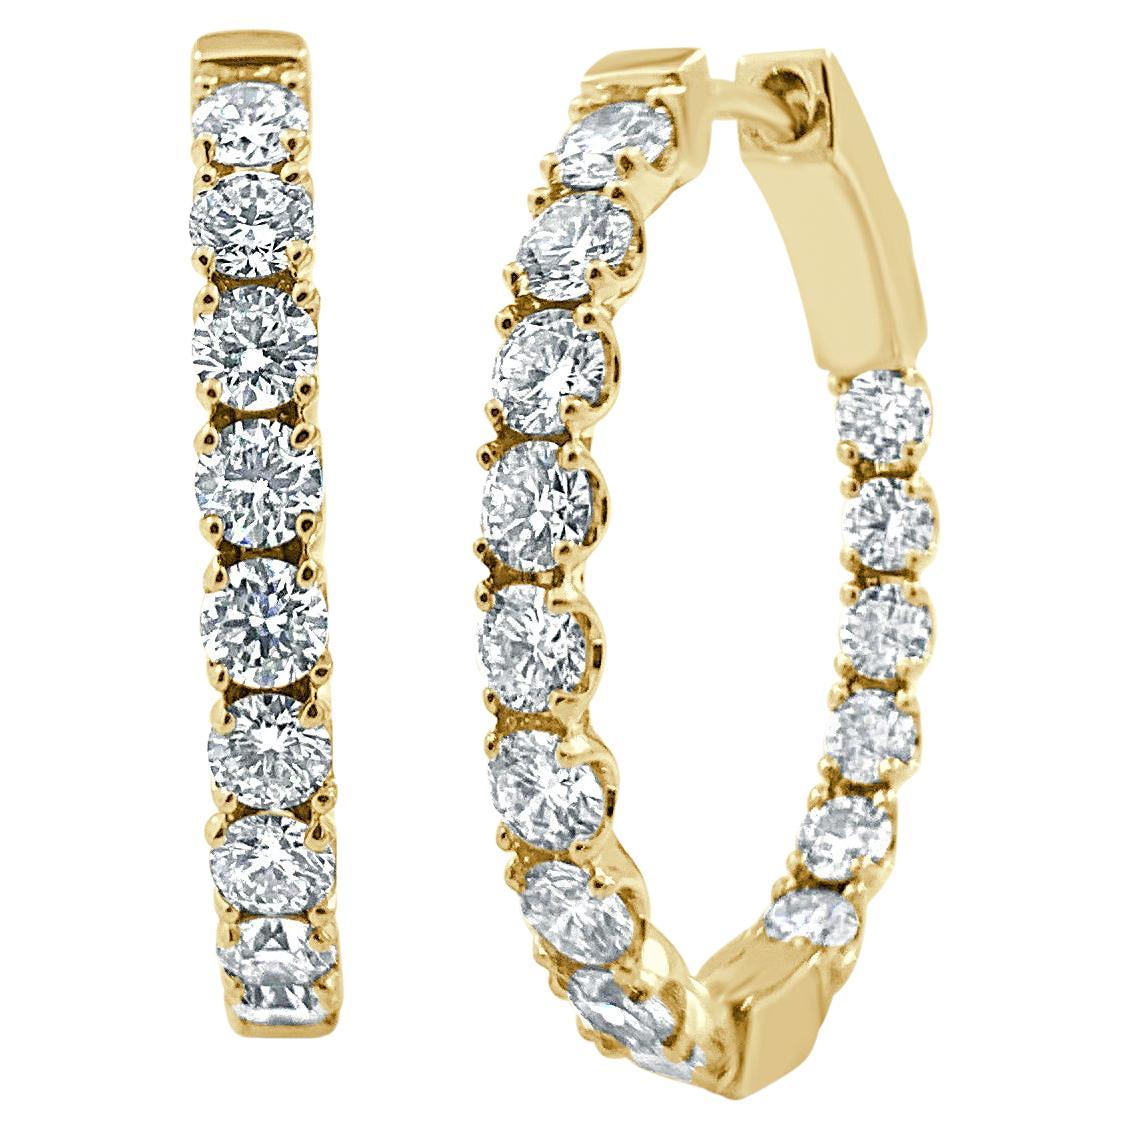 14 Karat Yellow Gold 1.90 Carat Diamond Oval Hoop Earrings